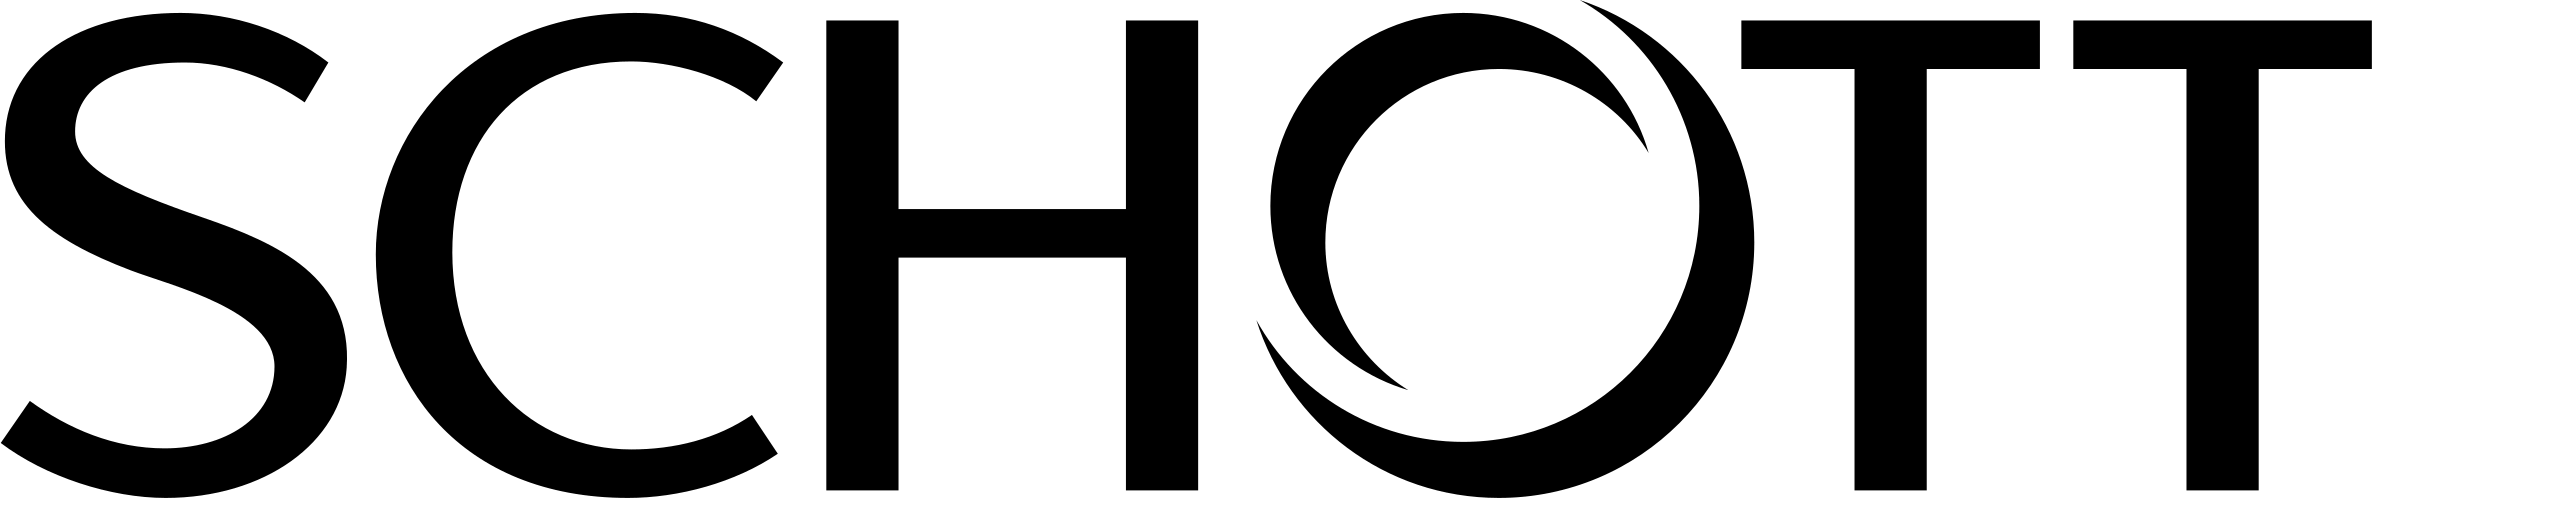 The Schott logo.